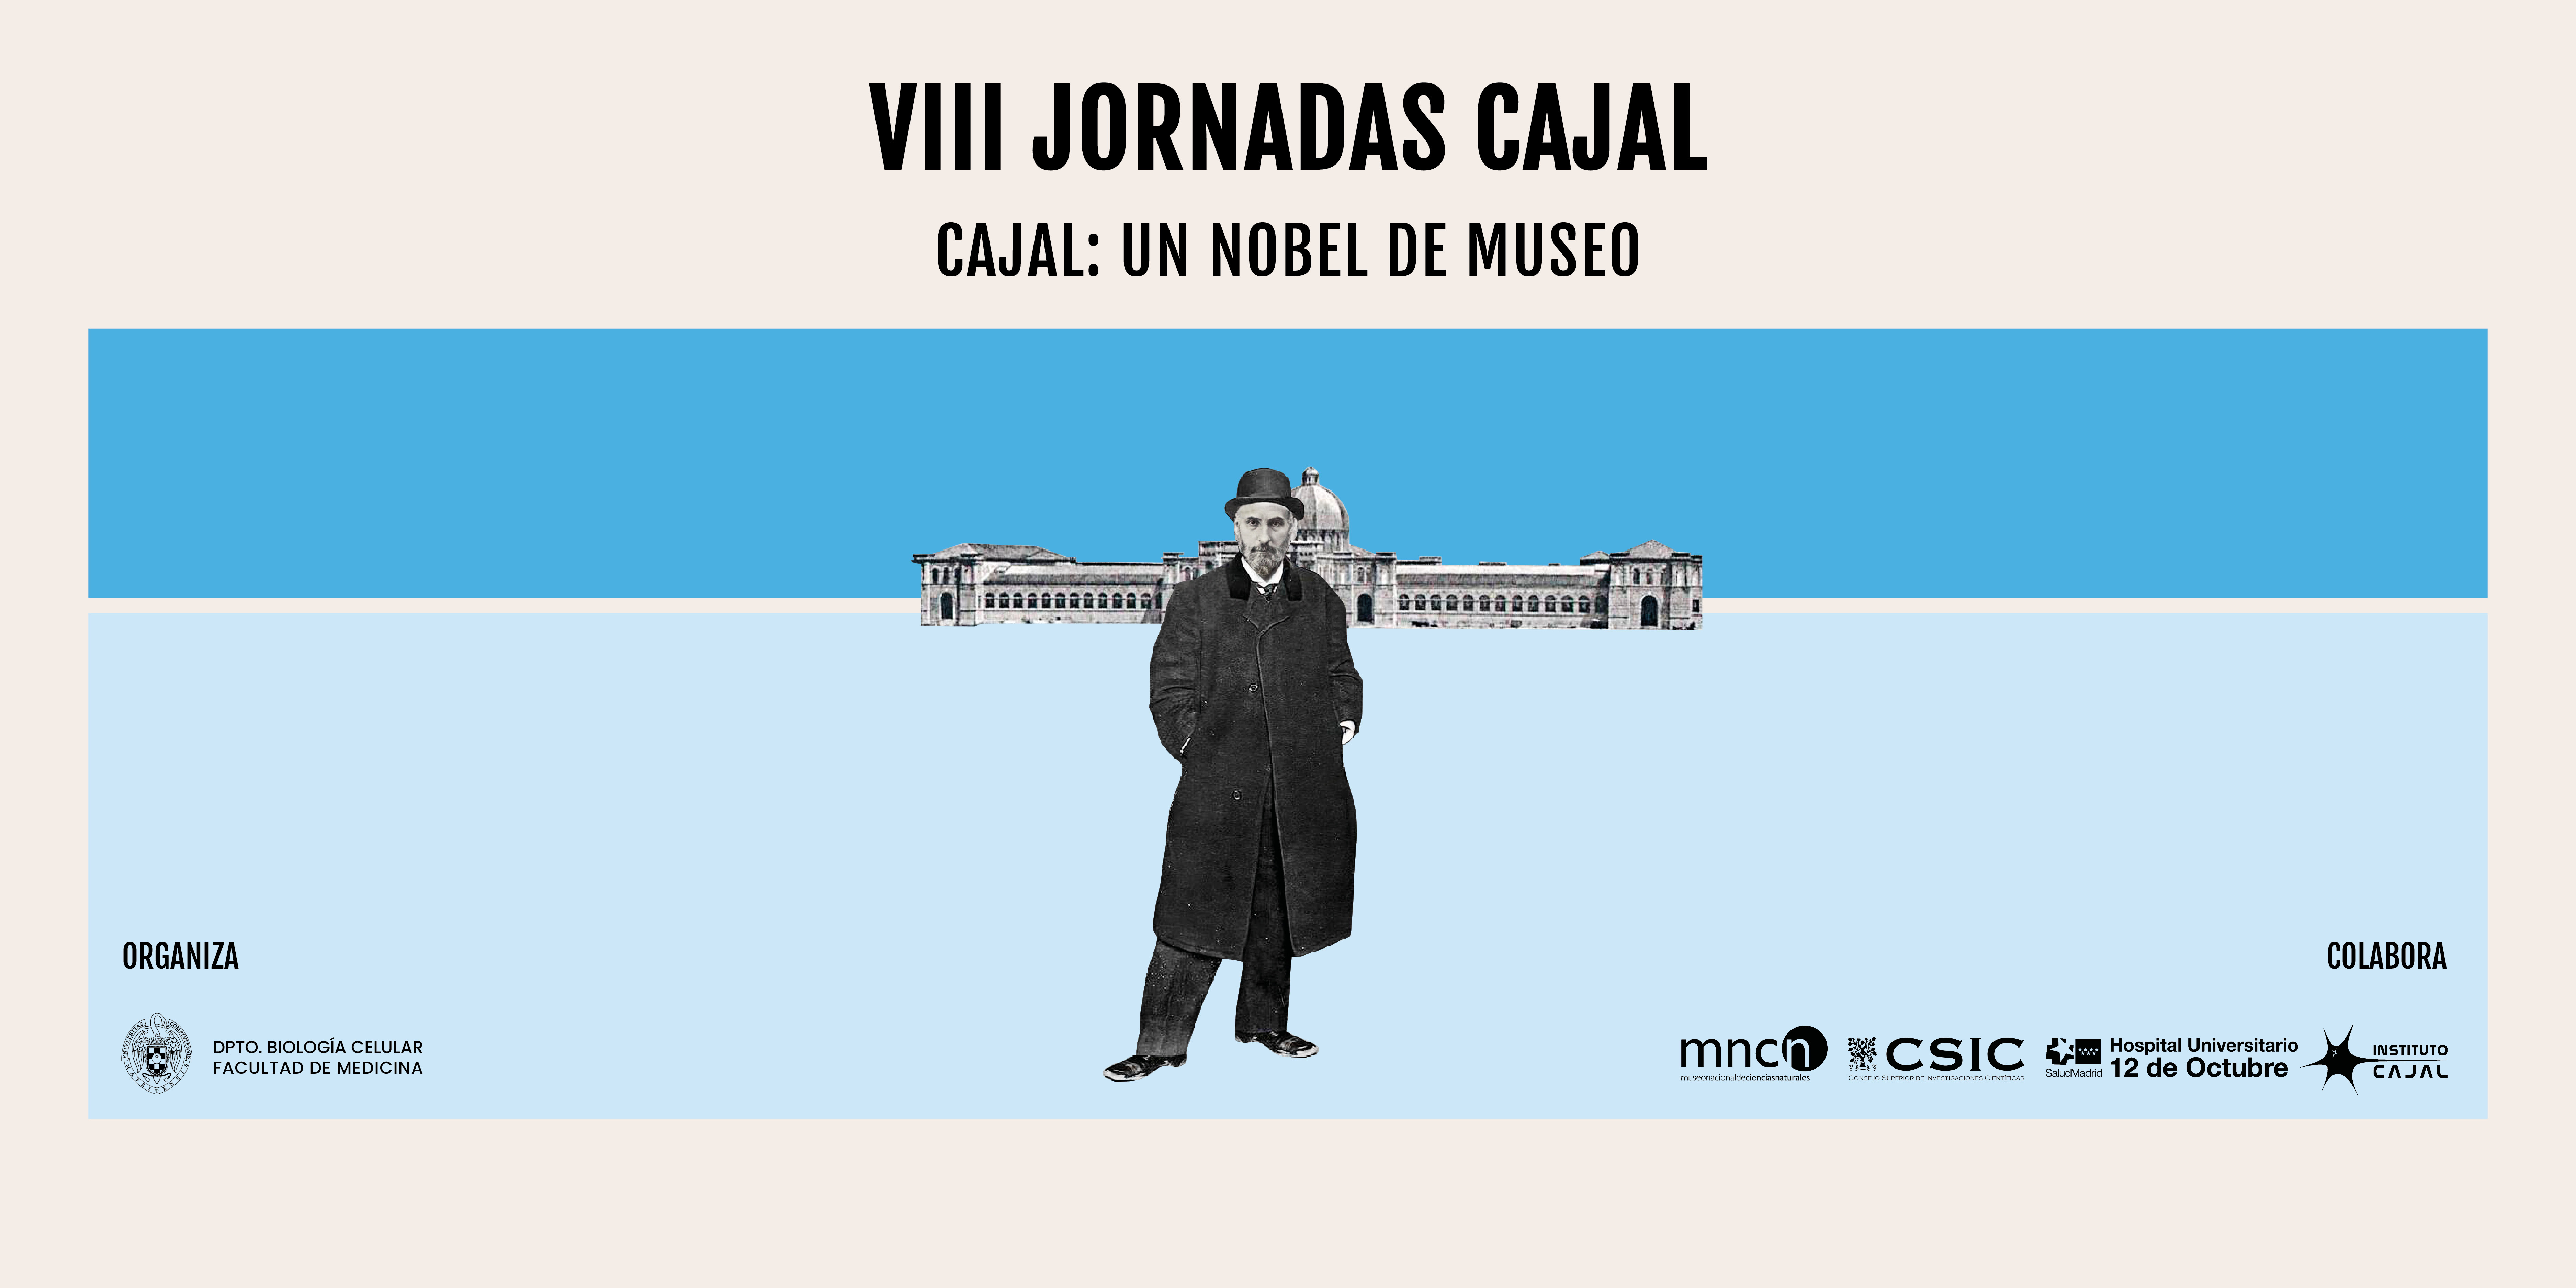 VIII Jornadas Cajal. Cajal: Un Nobel de Museo